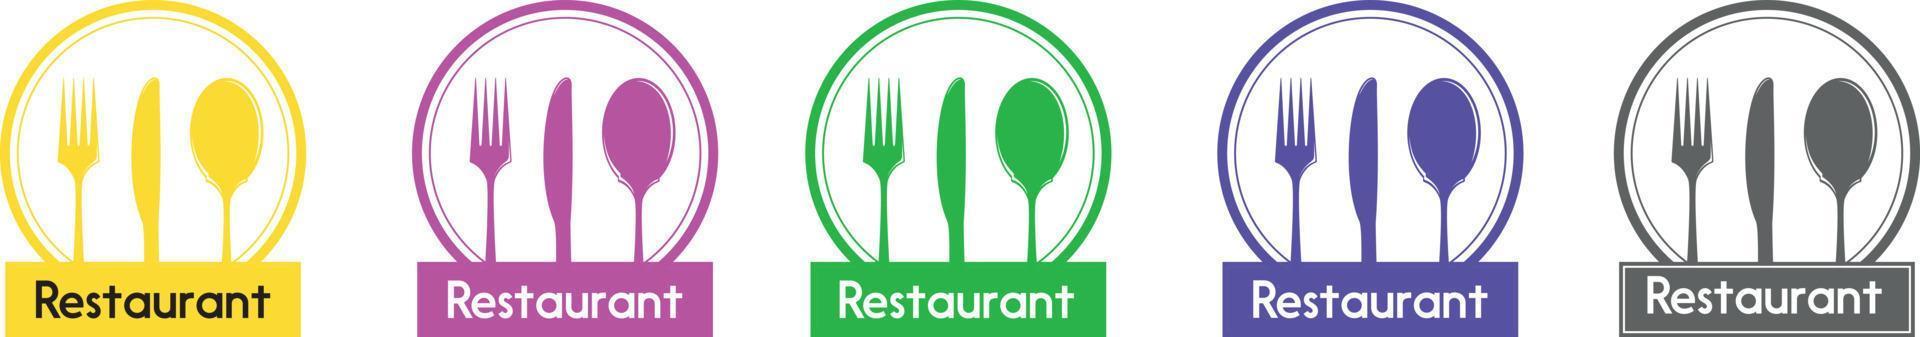 inspiración para un concepto de logotipo de restaurante clásico con utensilios, estilo de diseño plano. plantilla de logotipo de comida. adecuado para logotipos de restaurantes, tiendas y empresas. vector